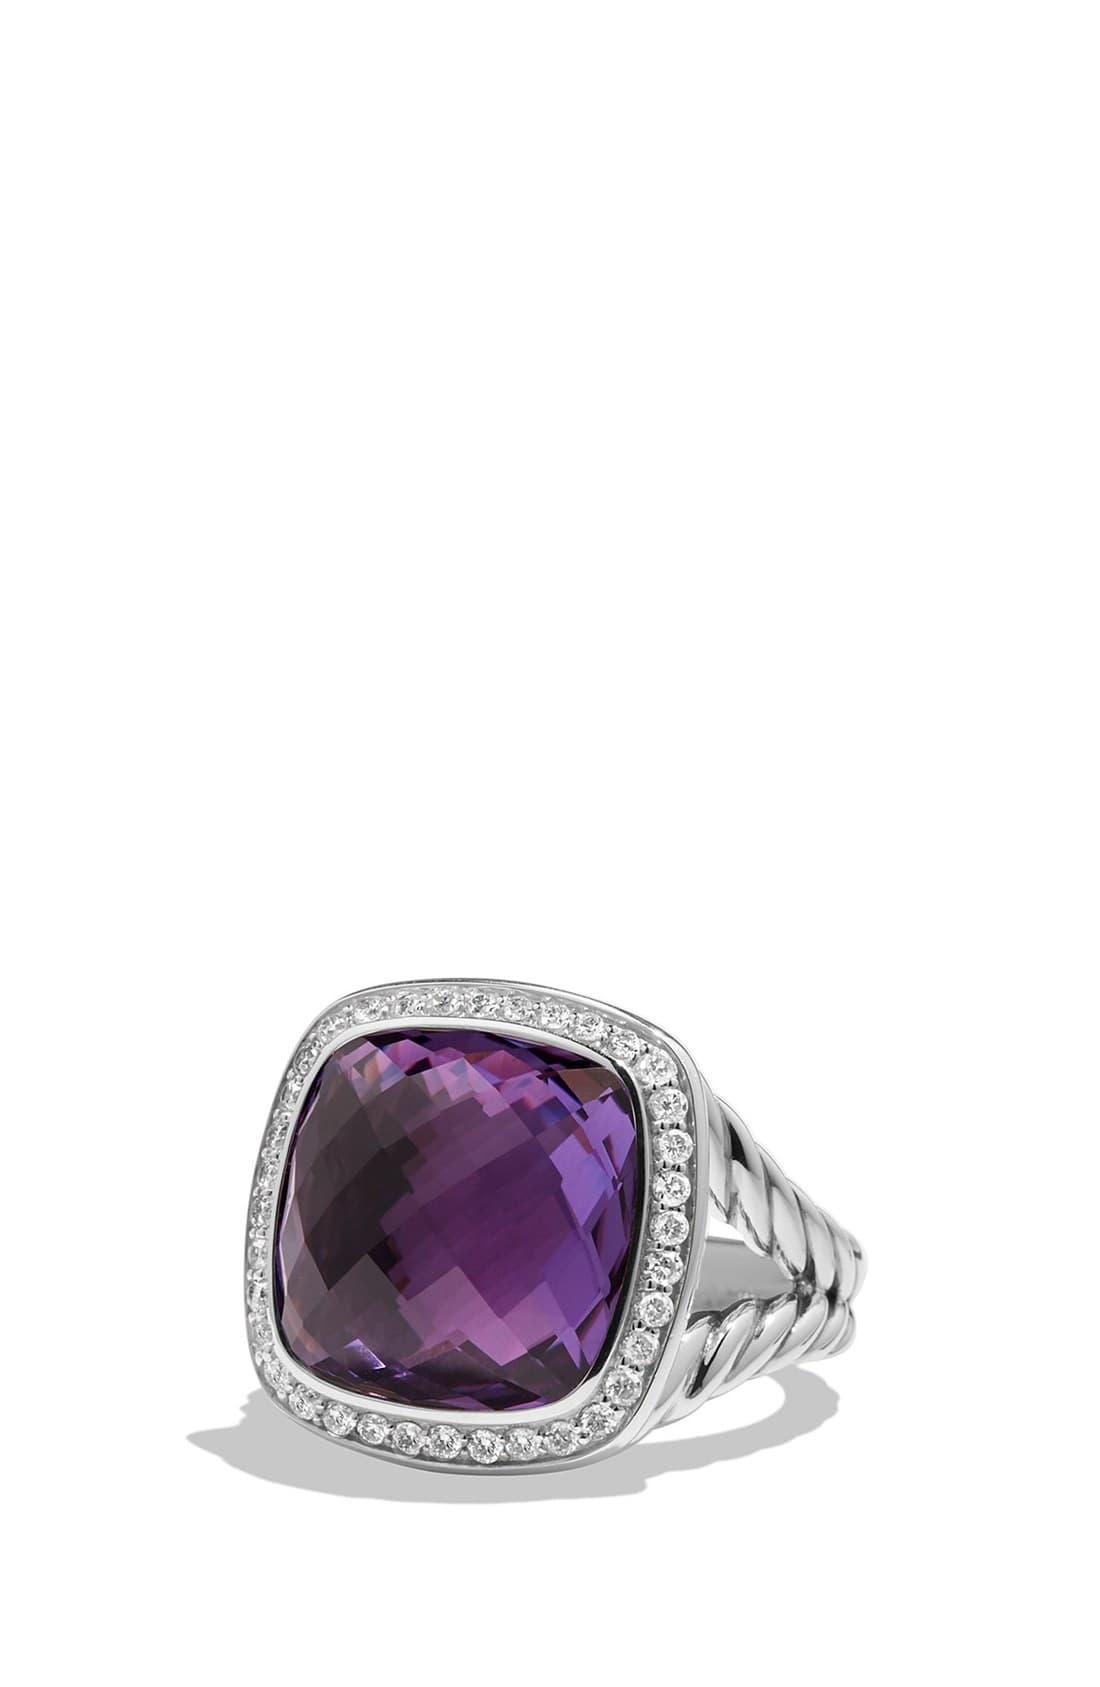 David Yurman 'albion' Ring With Semiprecious Stone And Diamonds in